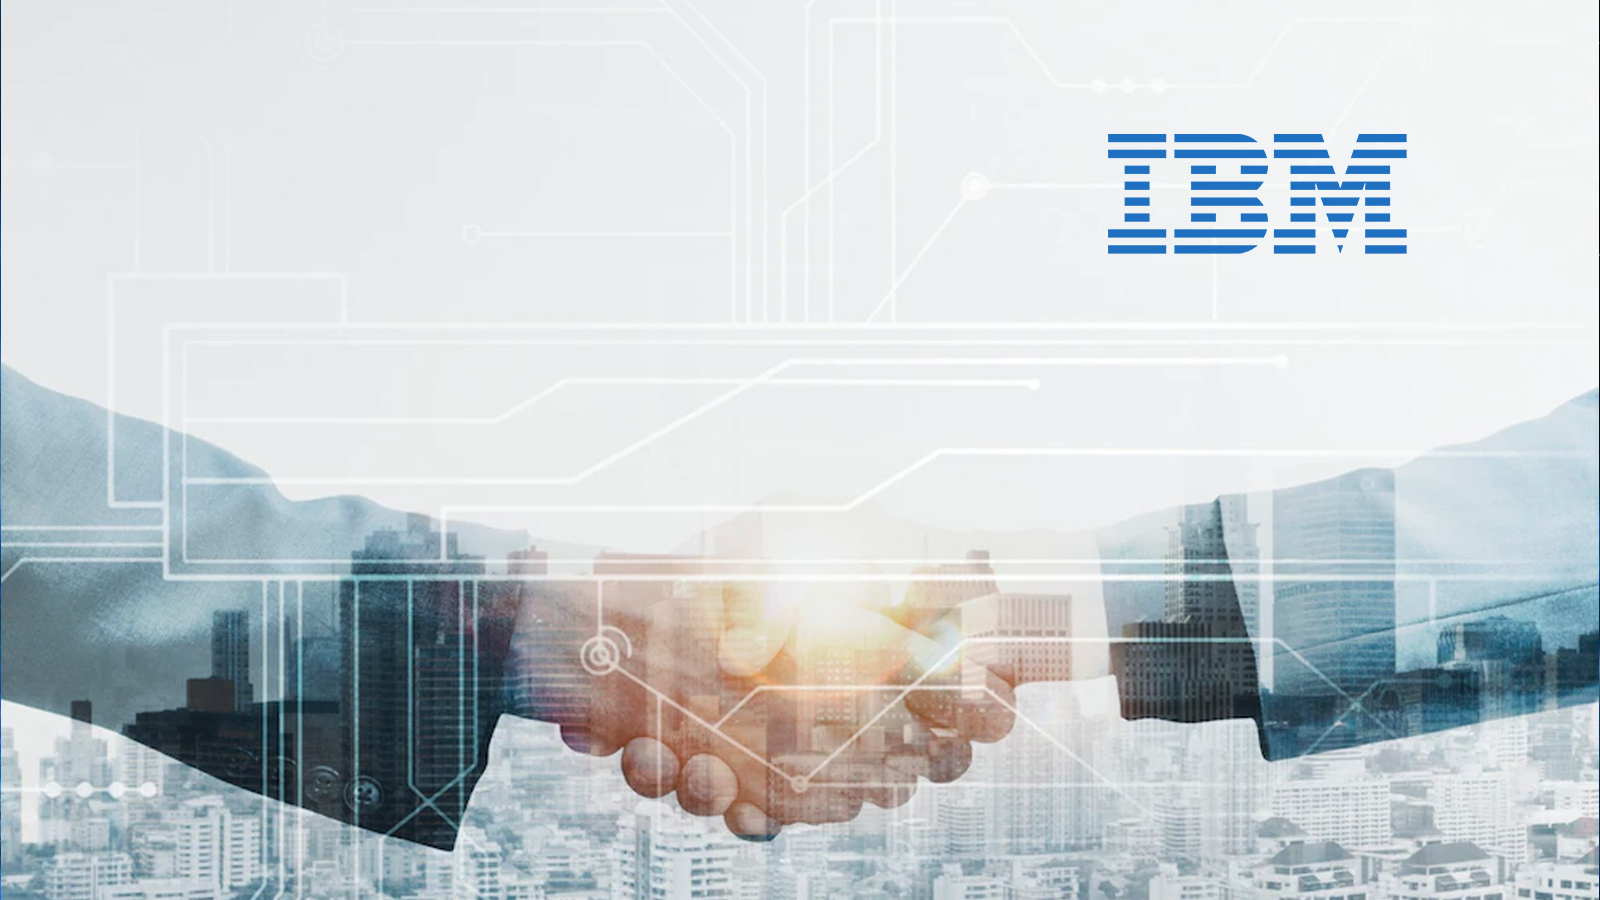 IBM Launches New Way to Partner through IBM Partner Plus